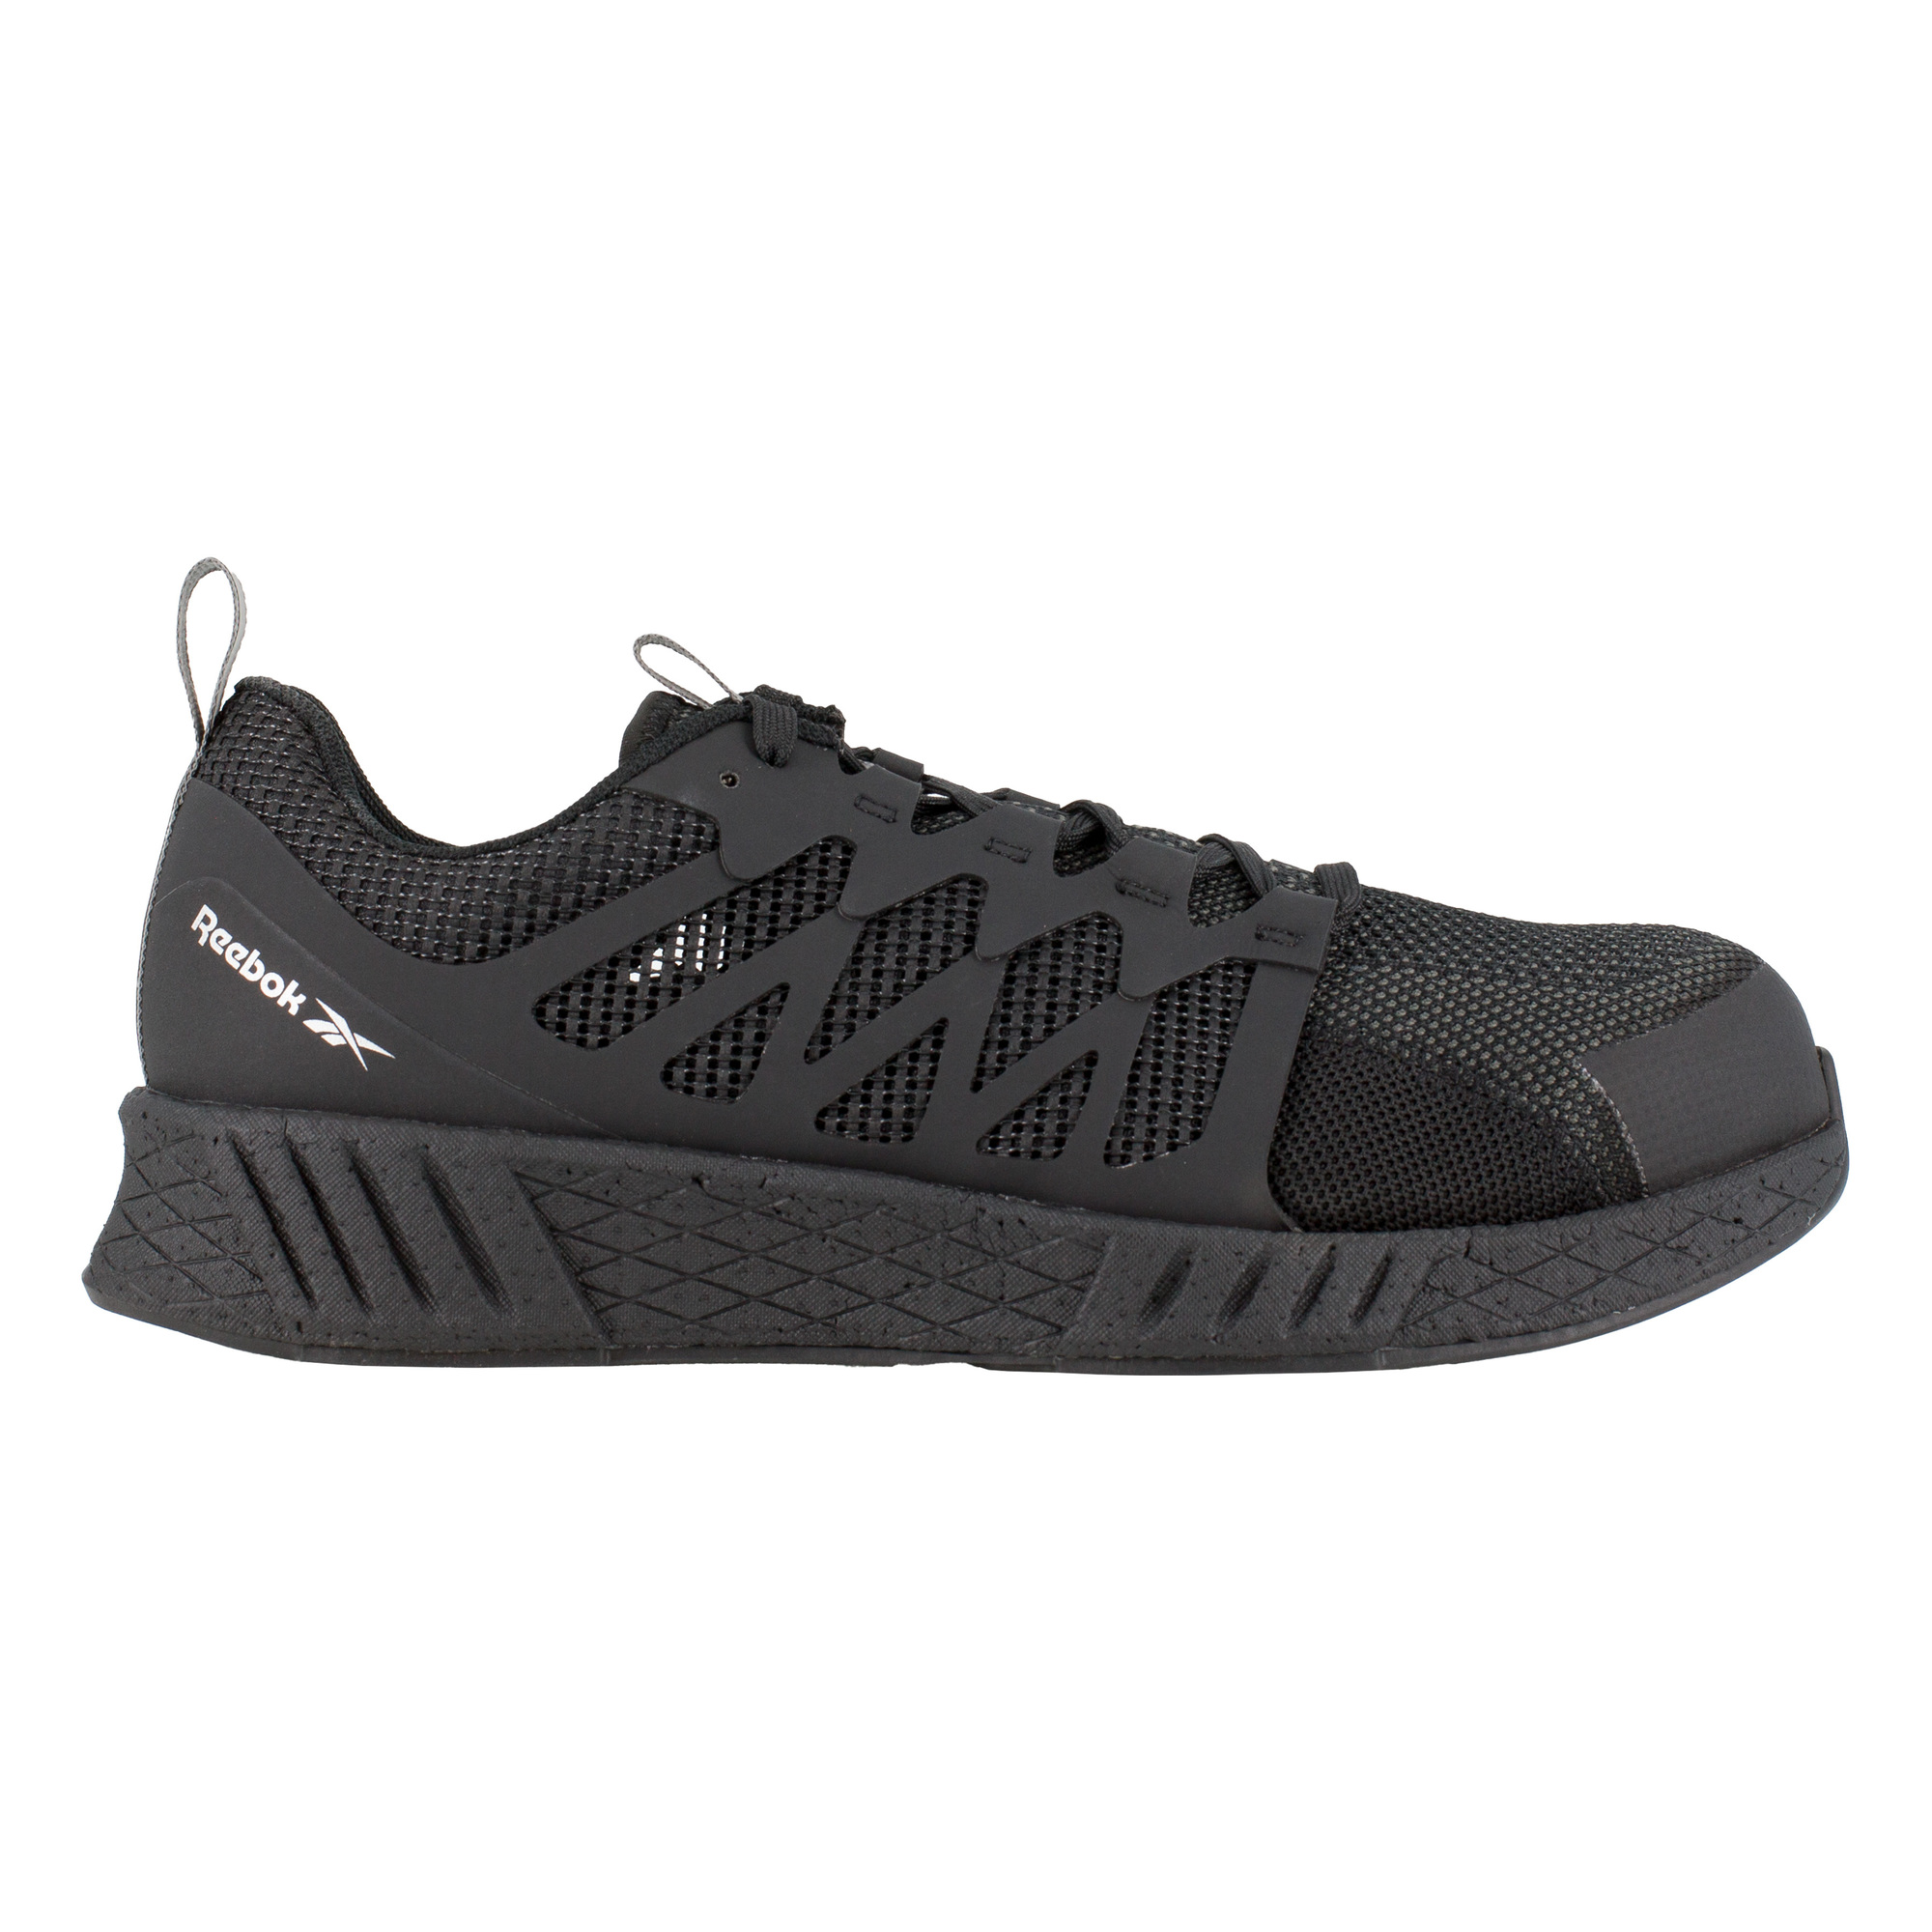 Reebok, Athletic Work Shoe, Size 6, Width Medium, Color Black, Model RB317